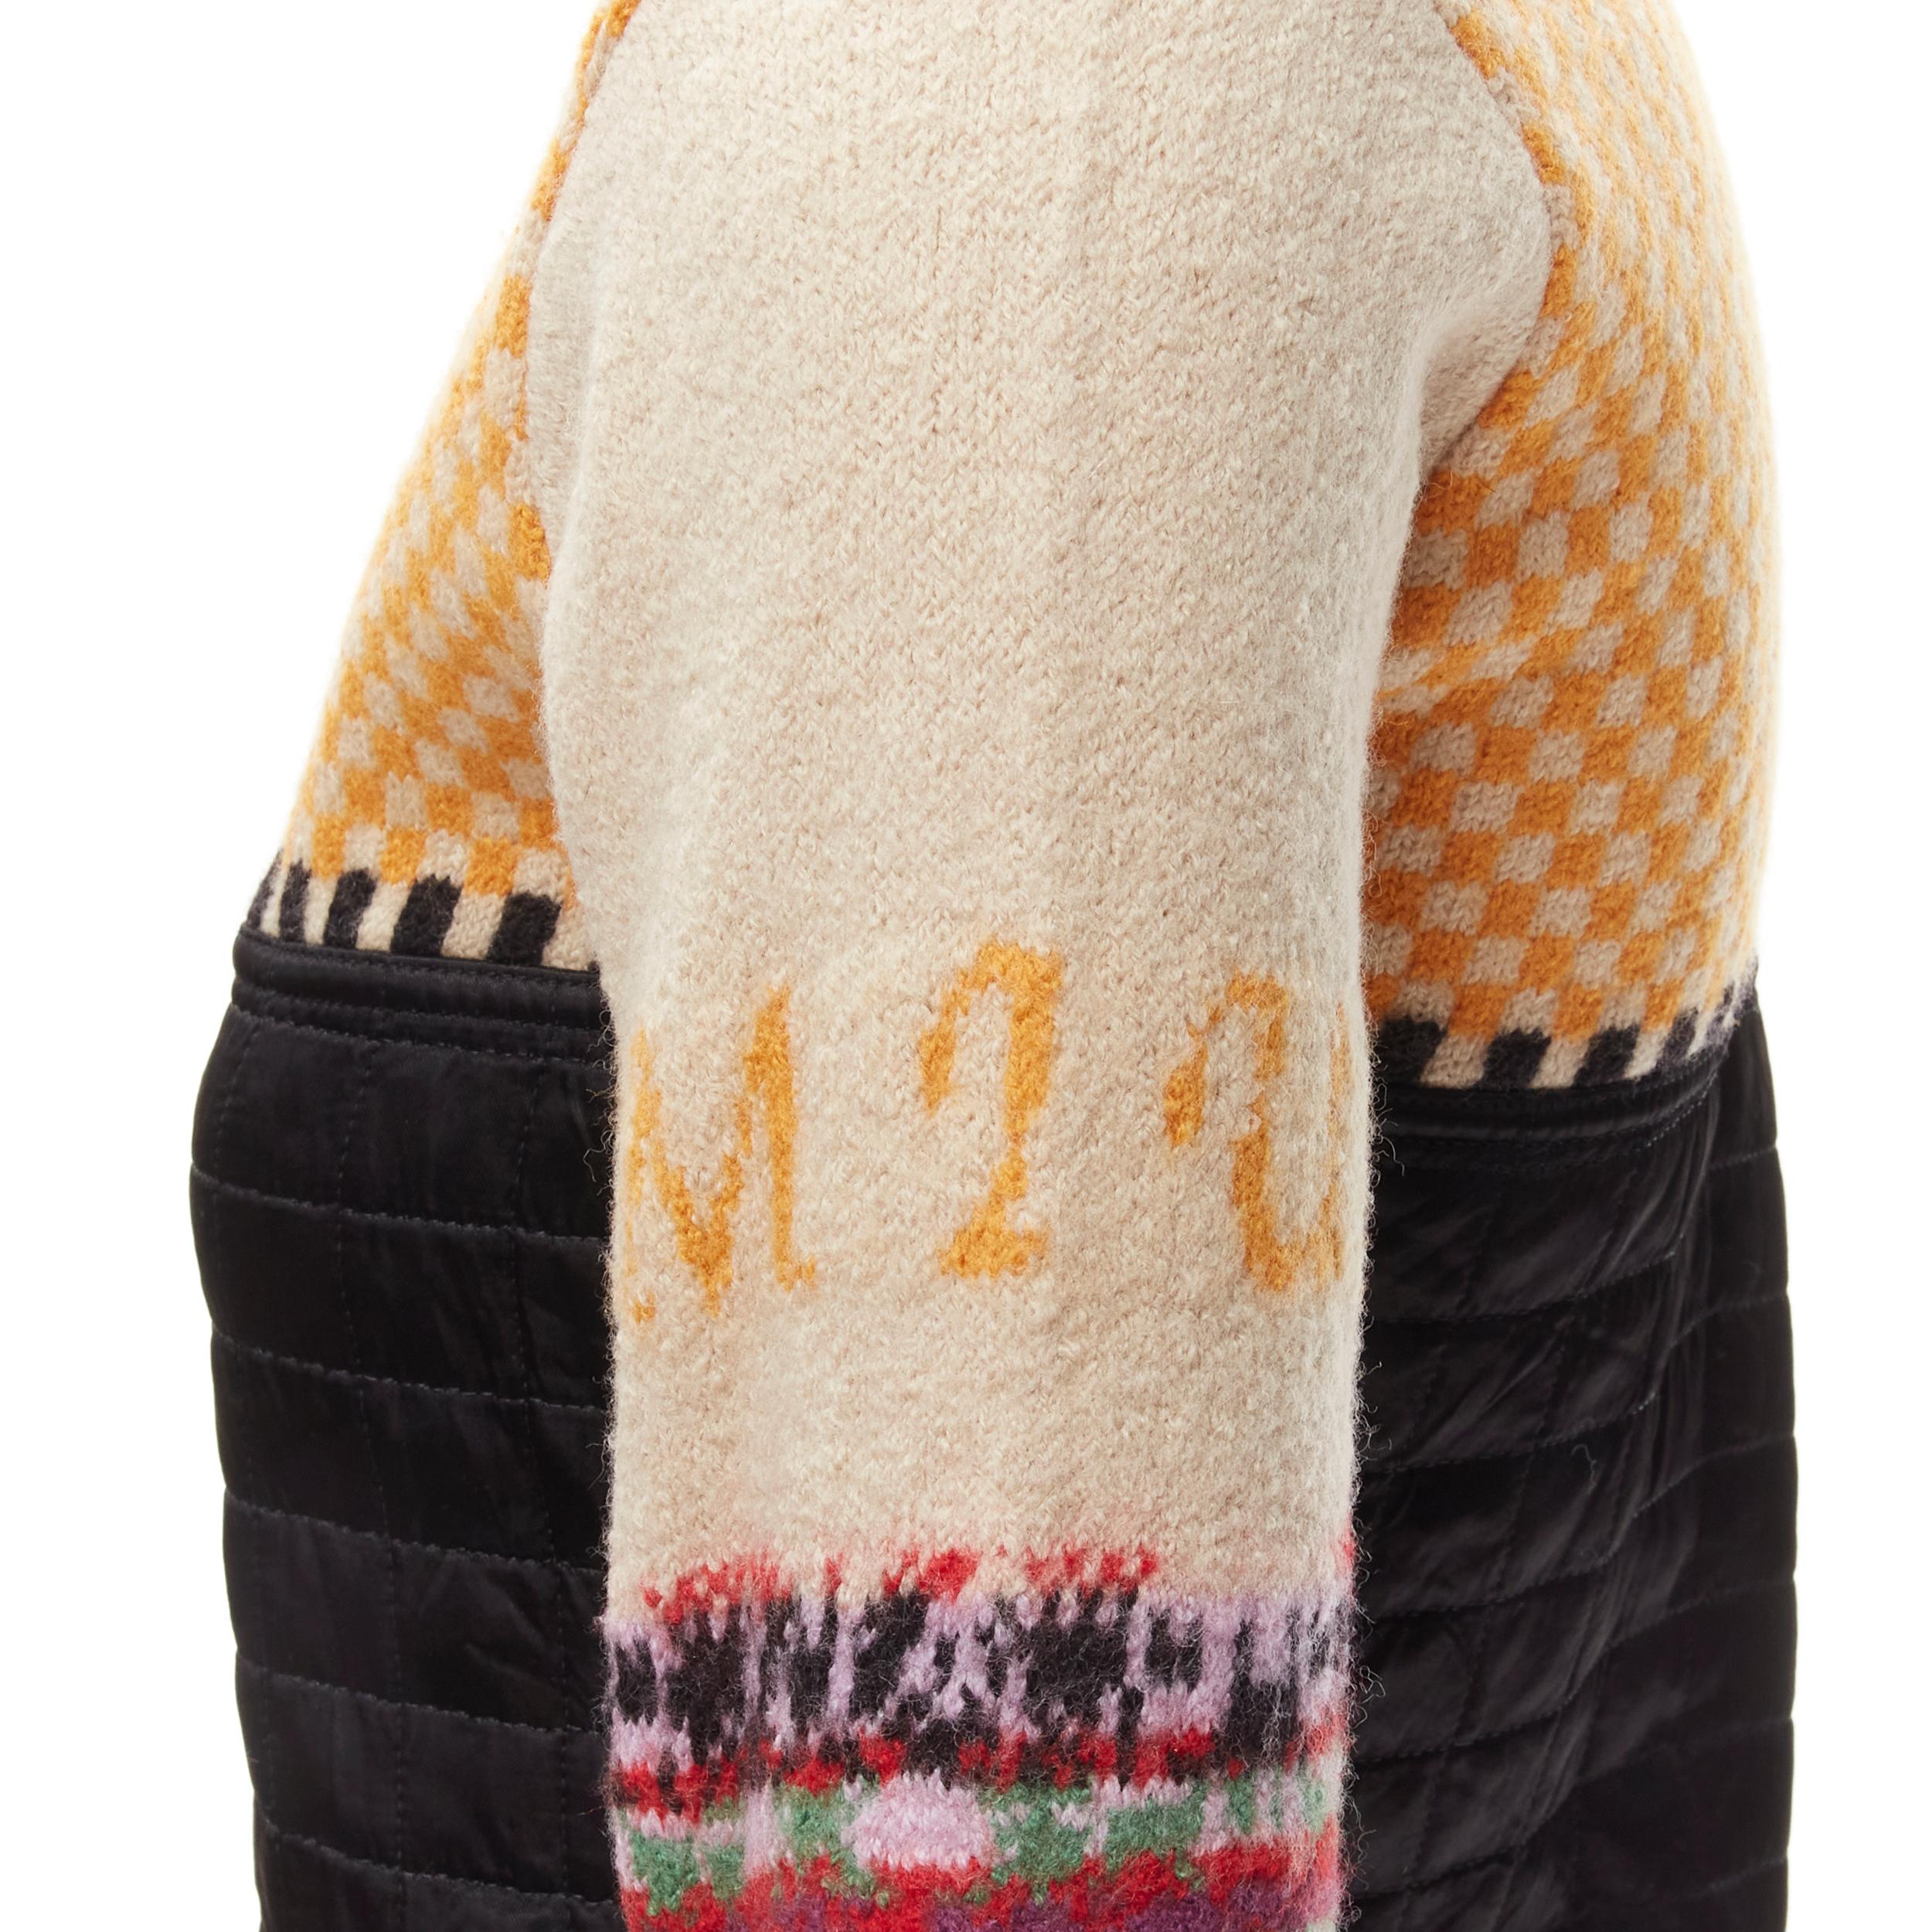 MIU MIU 2002 Vintage Look 18 wool logo abstract print quilted jacket IT40 S
Reference: TGAS/C01991
Brand: Miu Miu
Designer: Miuccia Prada
Collection: Fall 2001 Look 18 - Runway
Material: Wool, Fabric
Color: Multicolour, Black
Pattern: